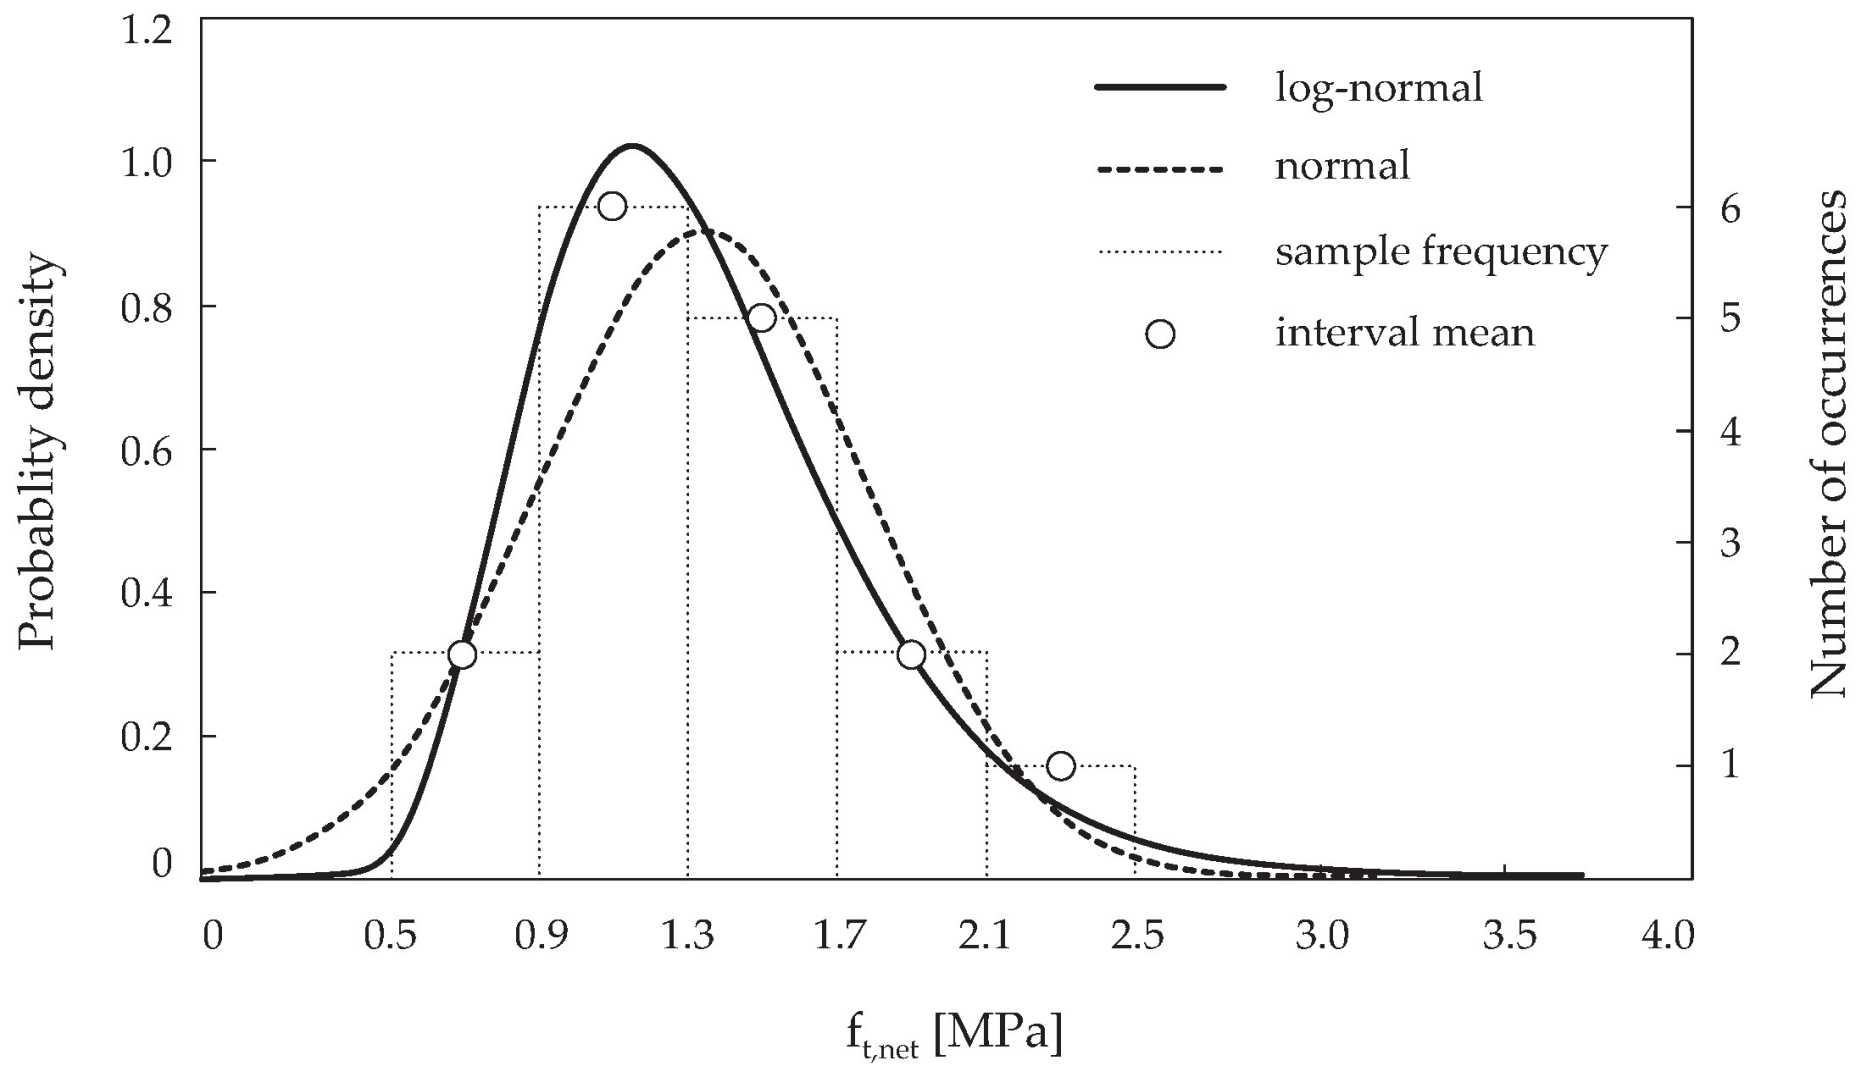 Enlarged view: Log-normal distribution 